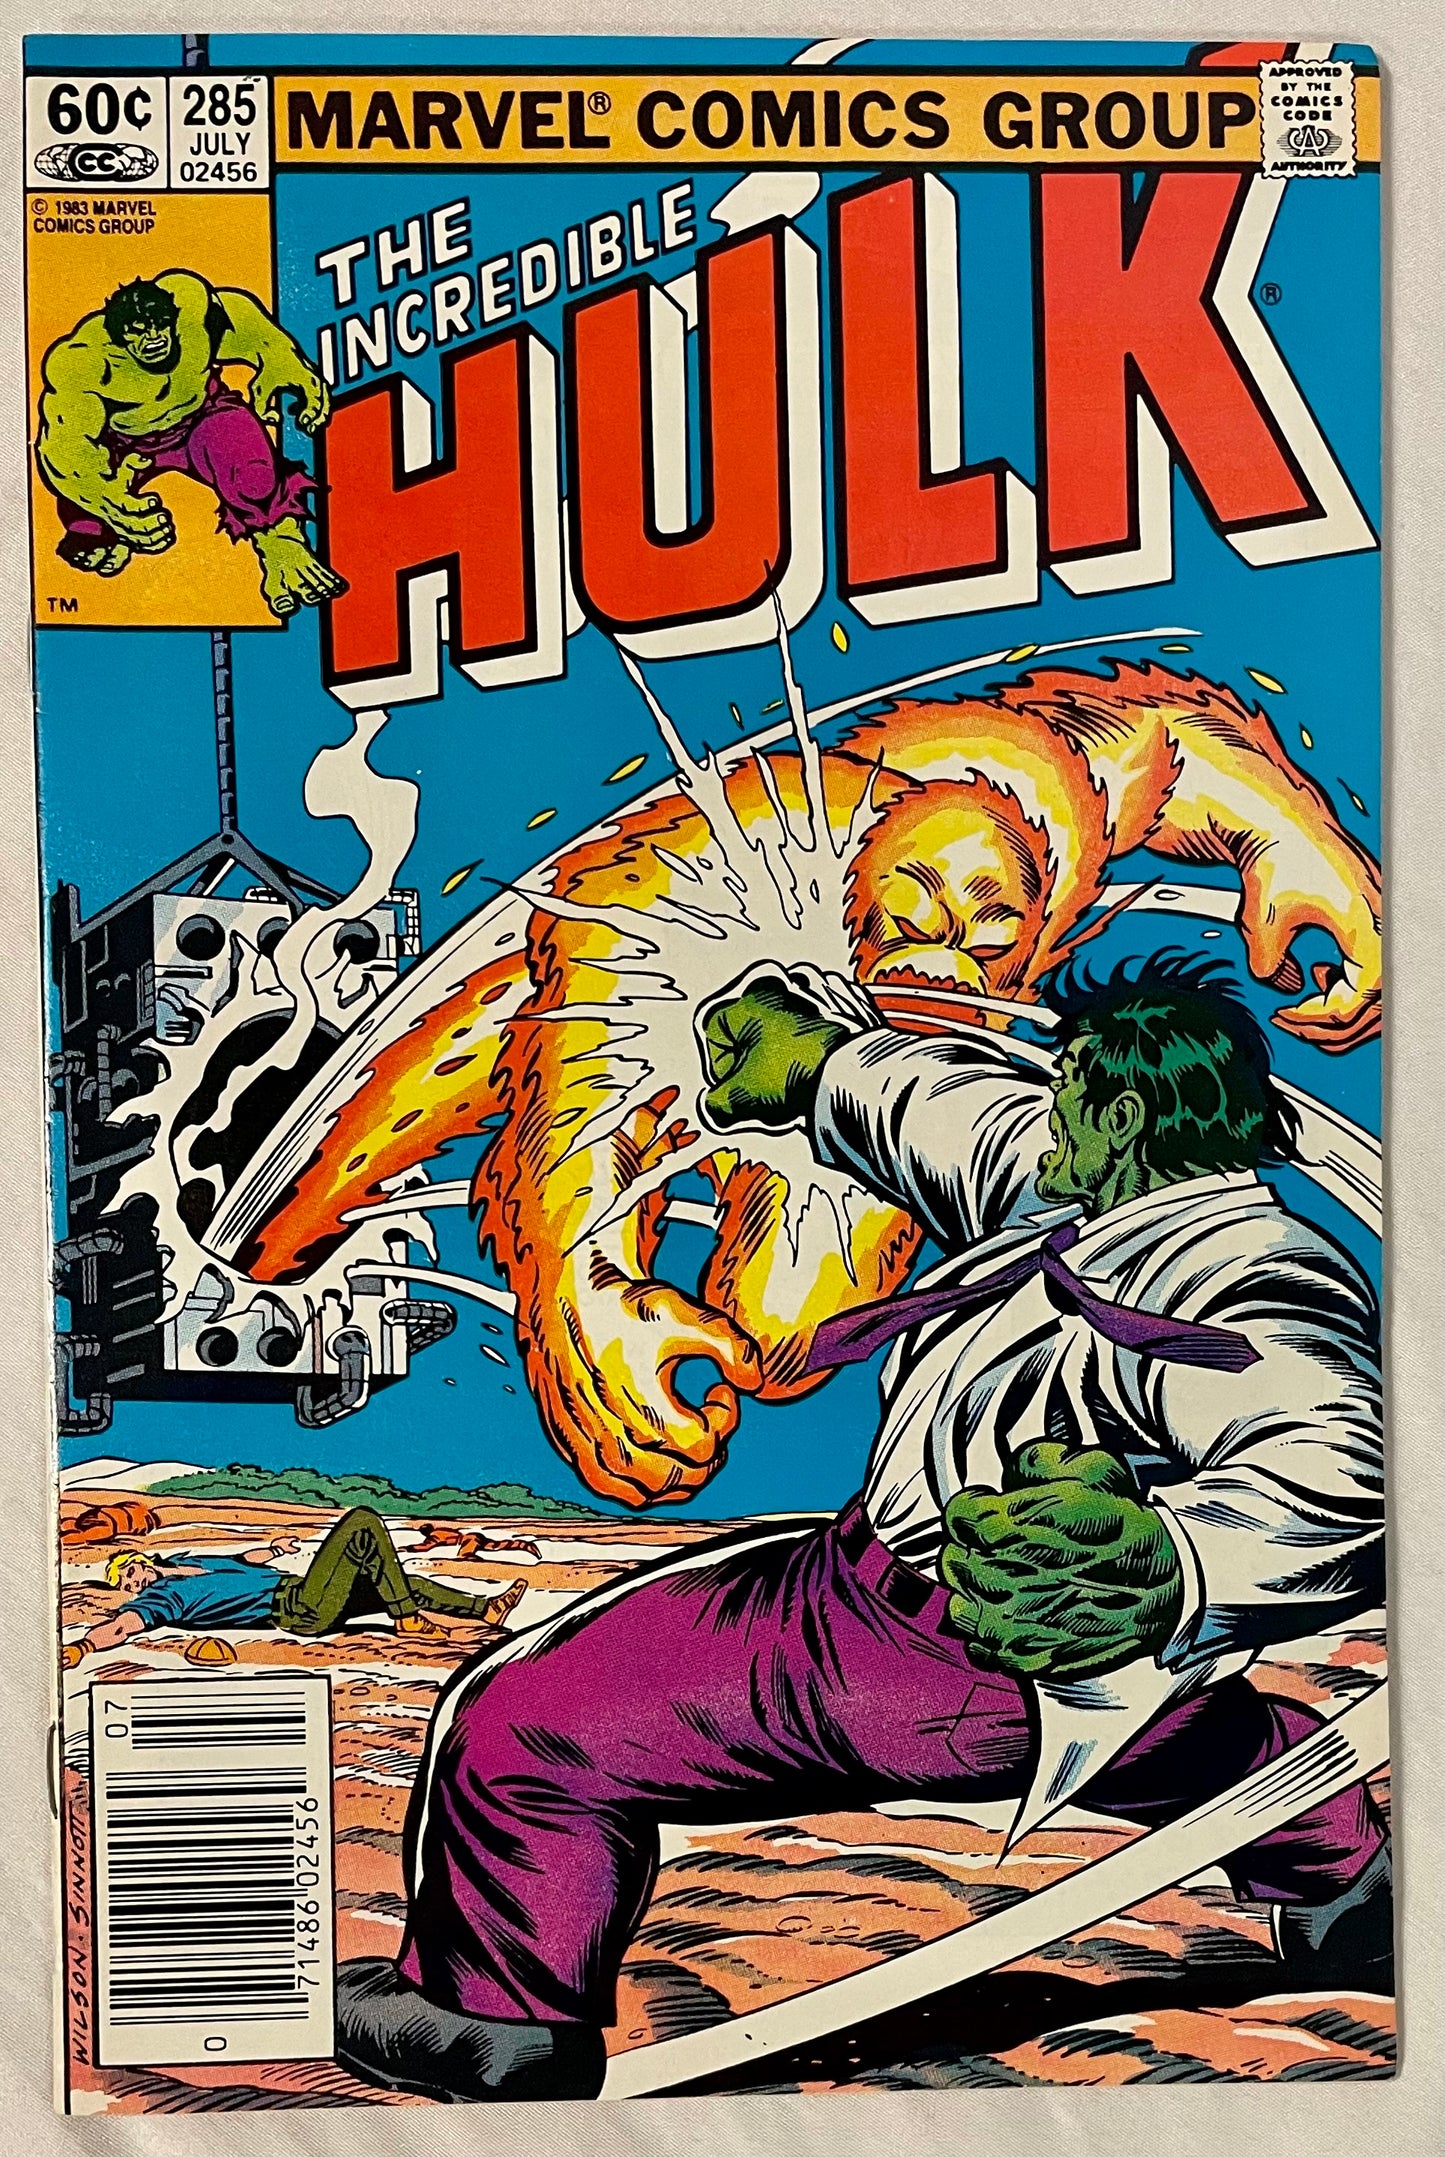 Marvel Comics The Incredible Hulk #285